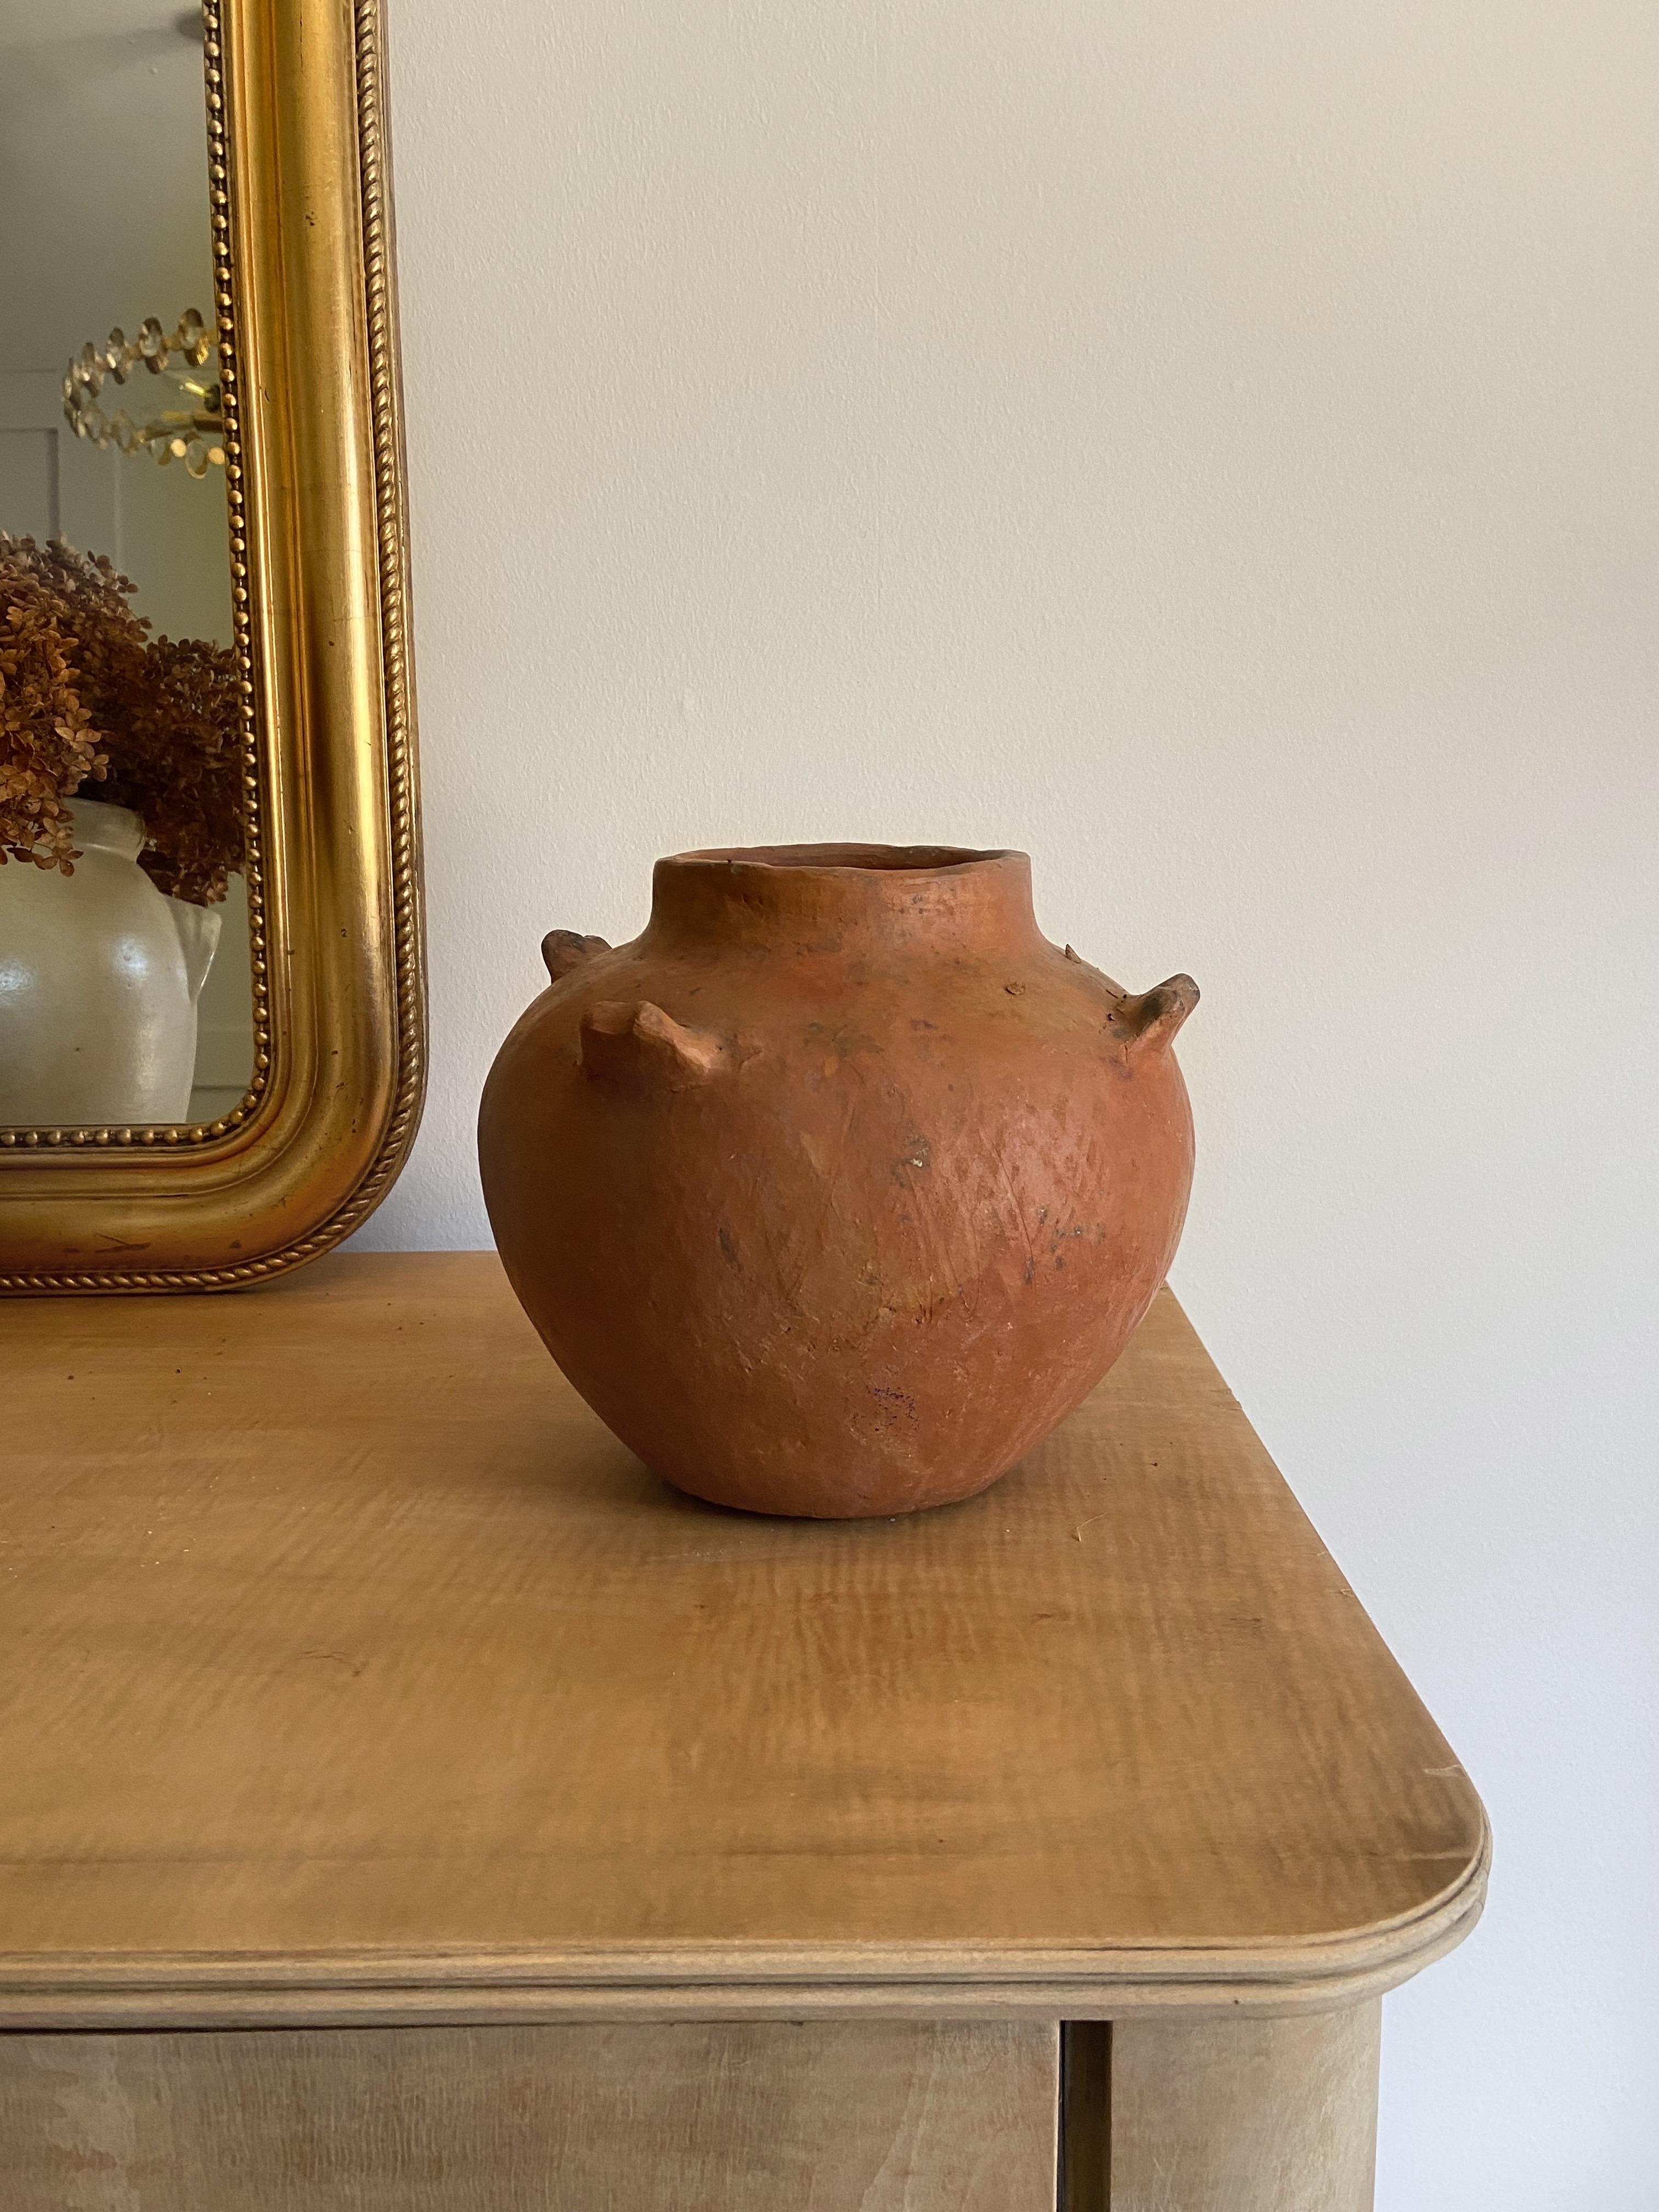 Primitive Ticino artisan made primitive terracotta ceramic vessel